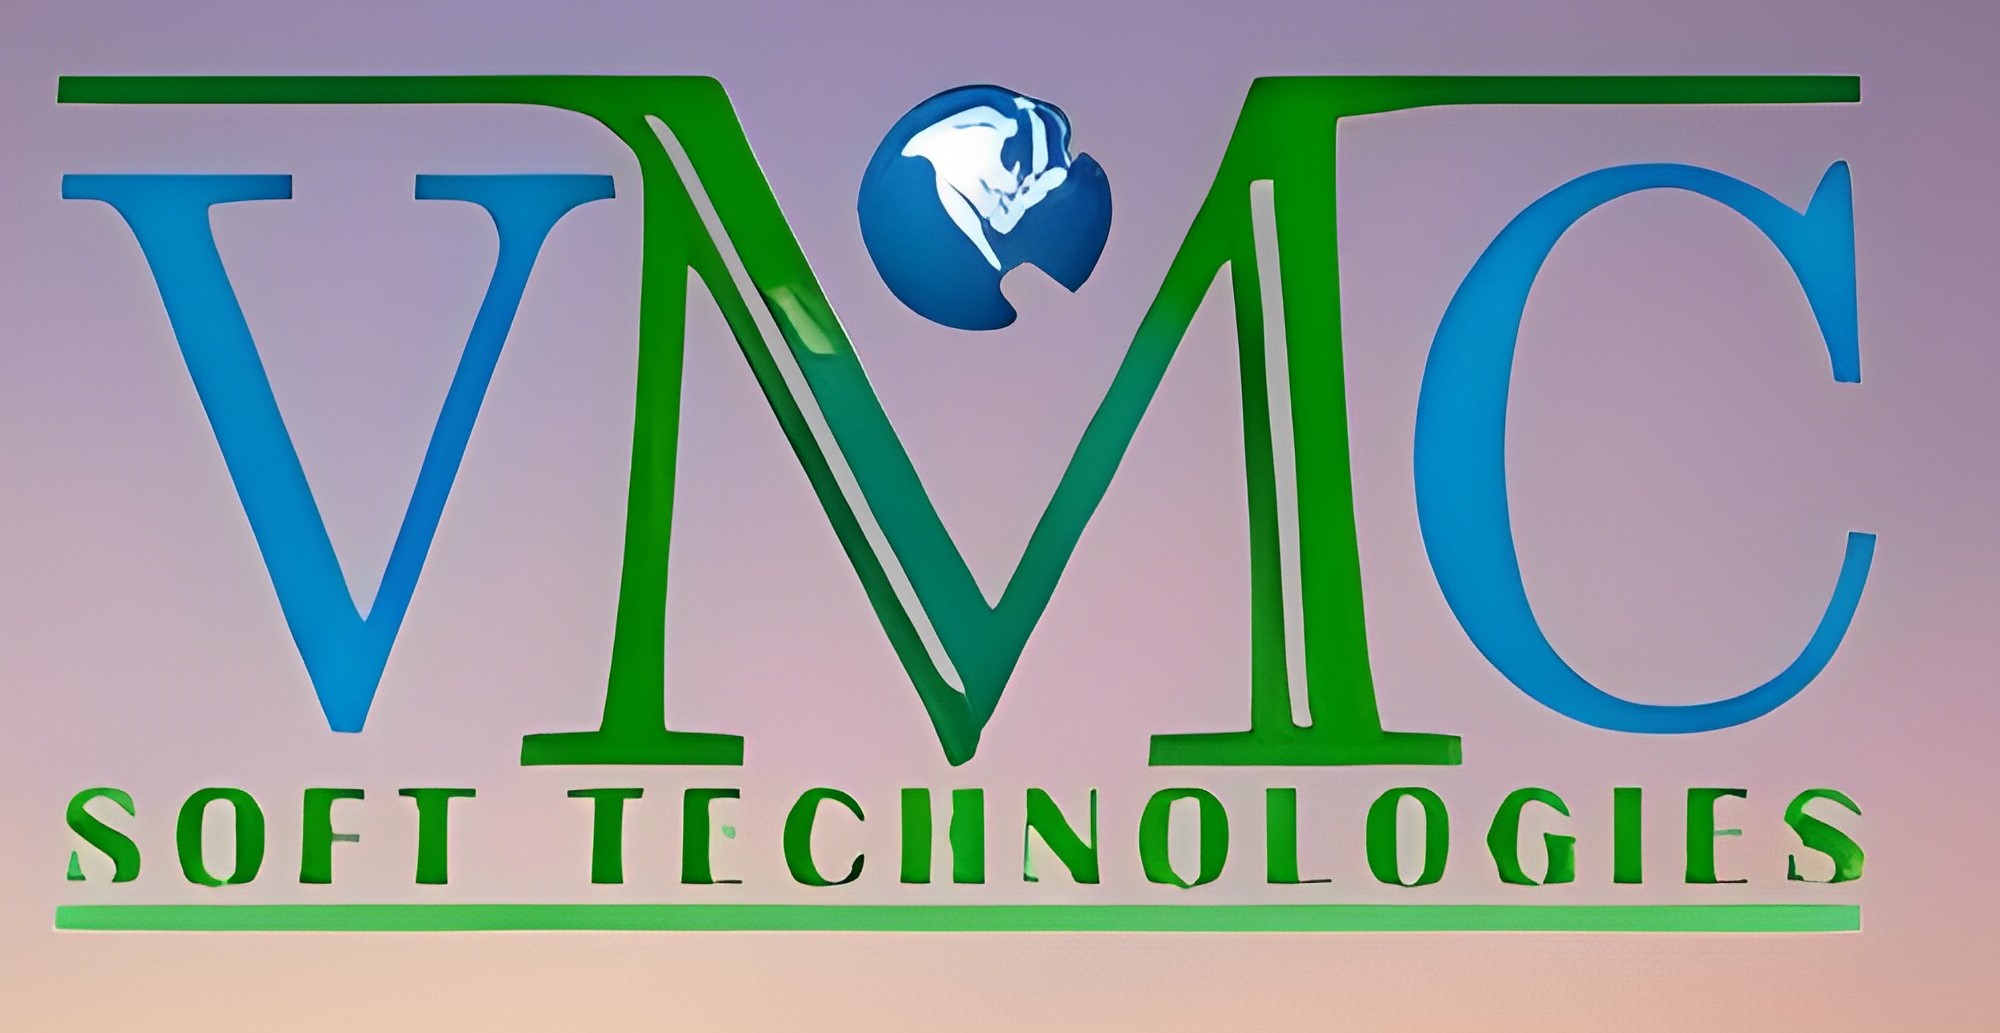 About vmc soft technologies